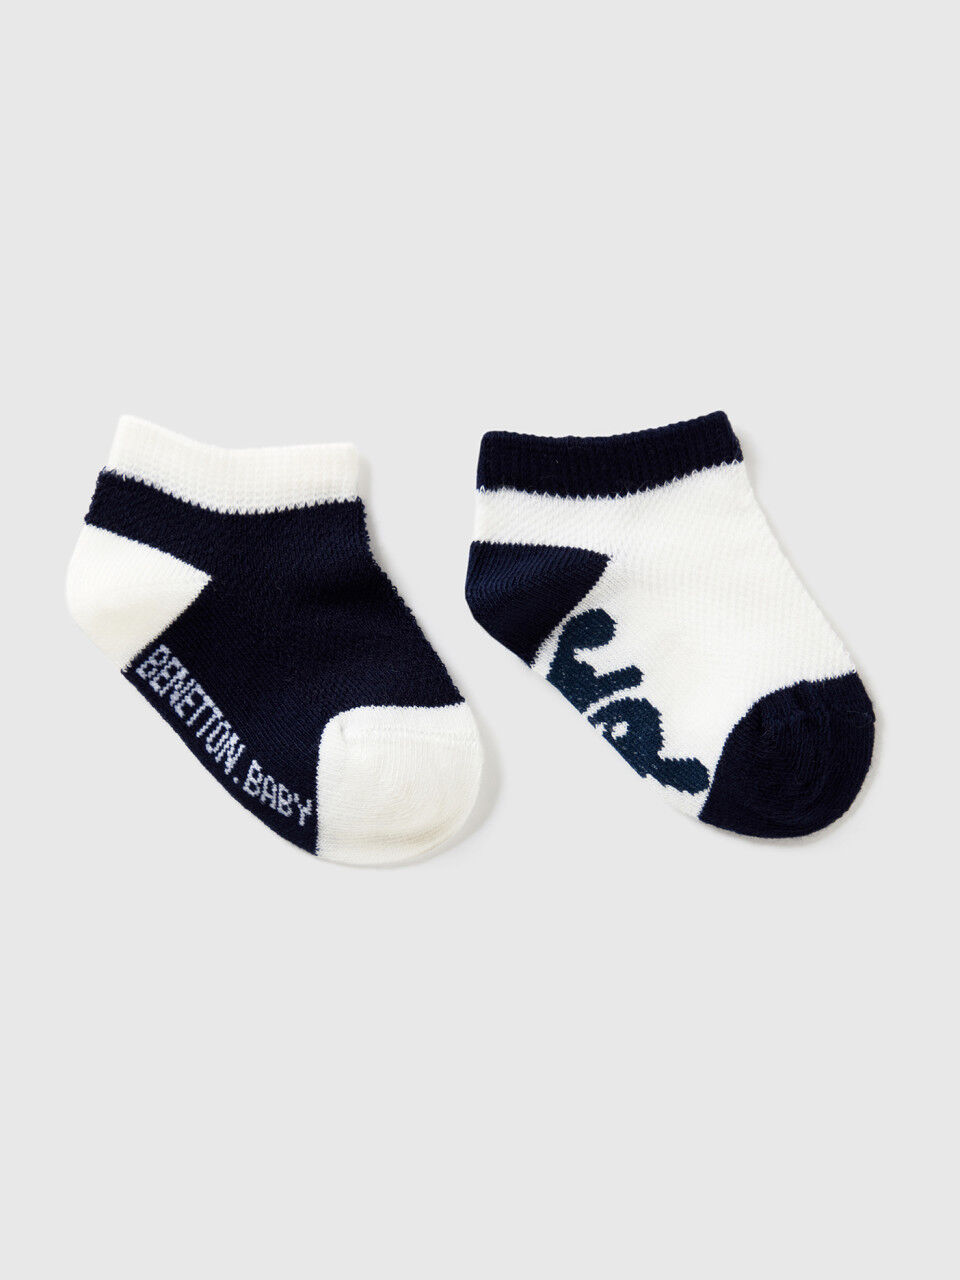 Two-tone sock set